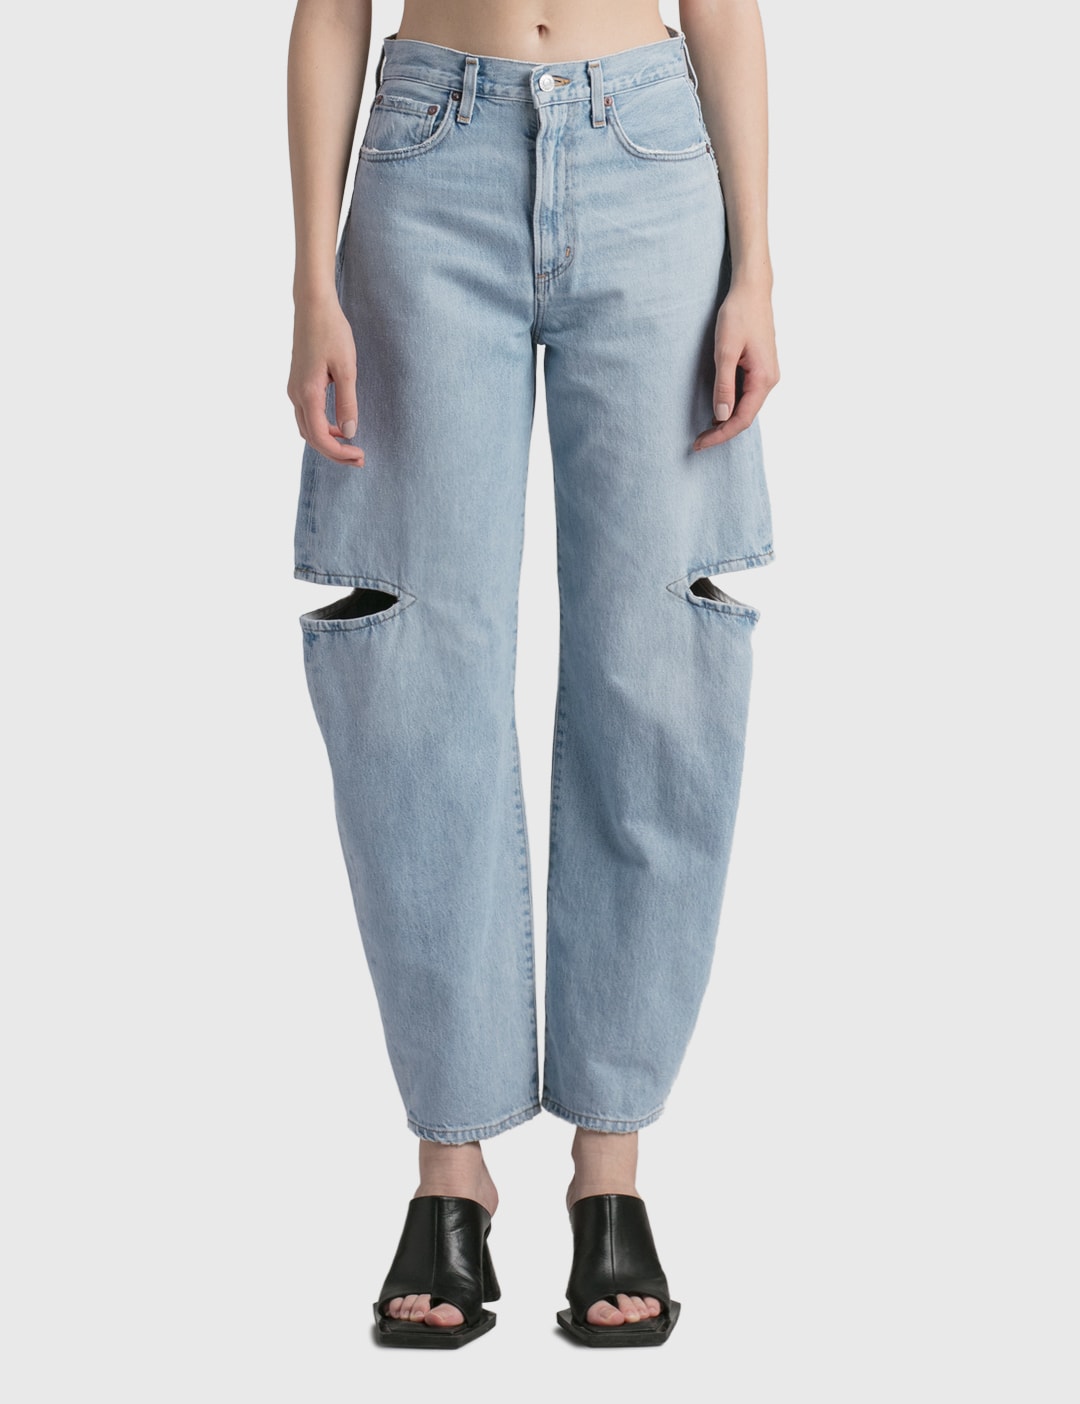 AGOLDE - Sanna Slice High Rise Jeans | HBX - Globally Curated Fashion ...